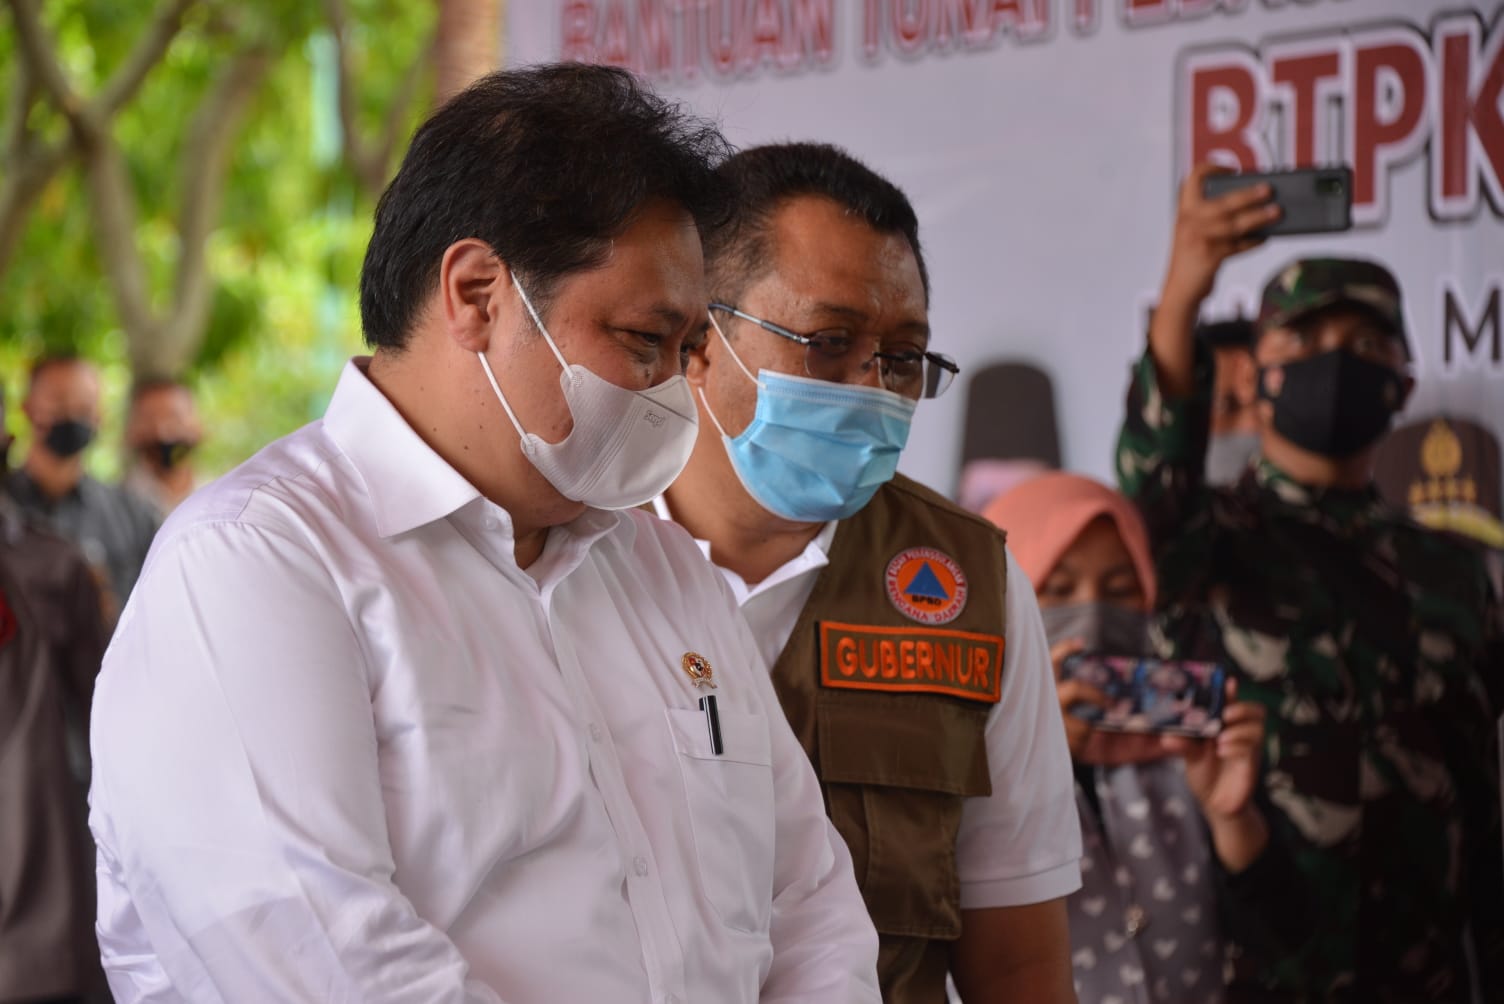 	Menteri Koordinator Bidang Perekonomian Airlangga Hartarto saat memberikan bantuan kepada pekerja kaki lima.